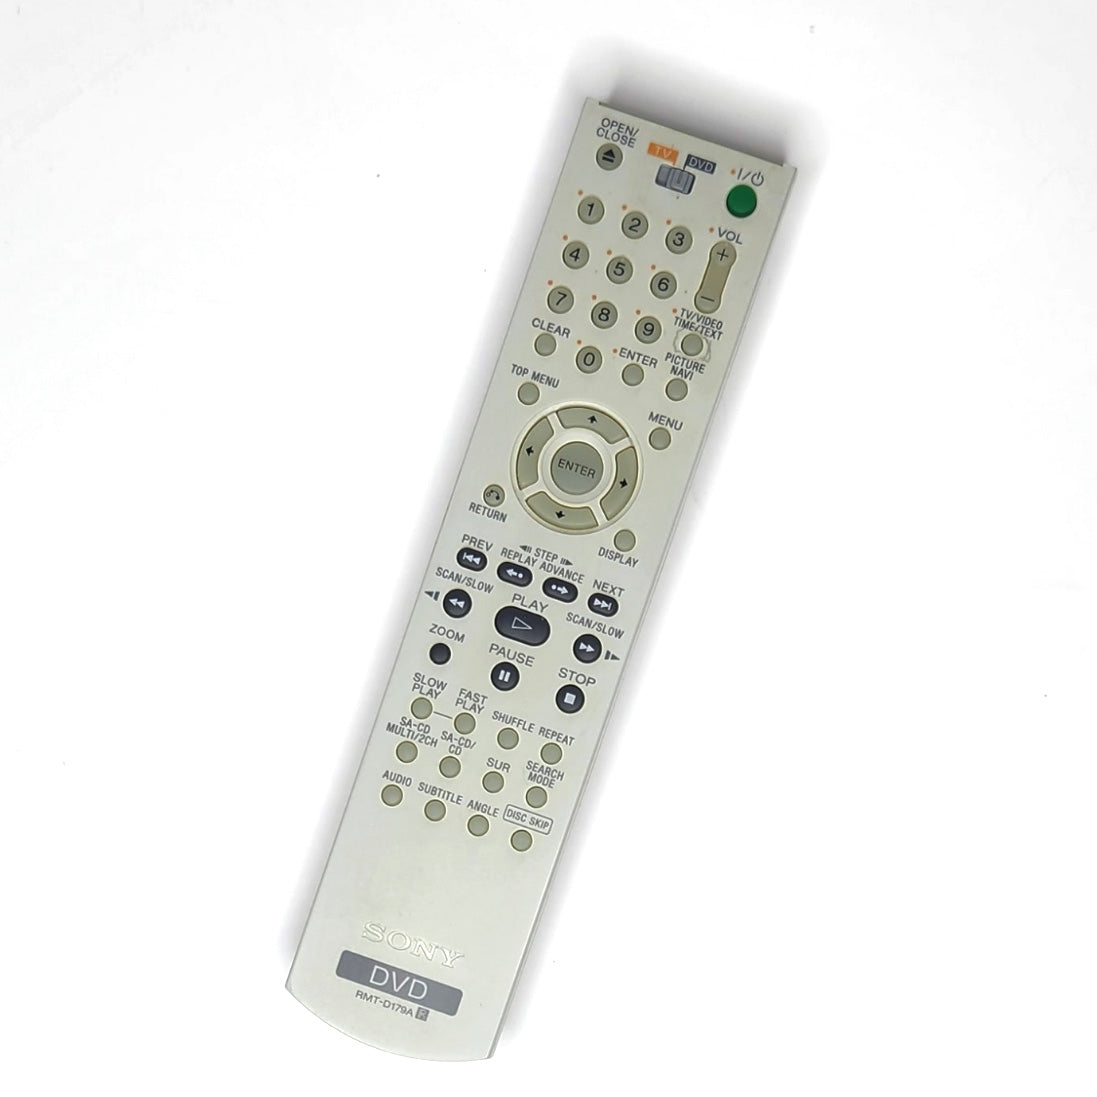 Sony DVP-NC80V DVD/CD Player, 5 Disc Carousel Changer - Remote Control